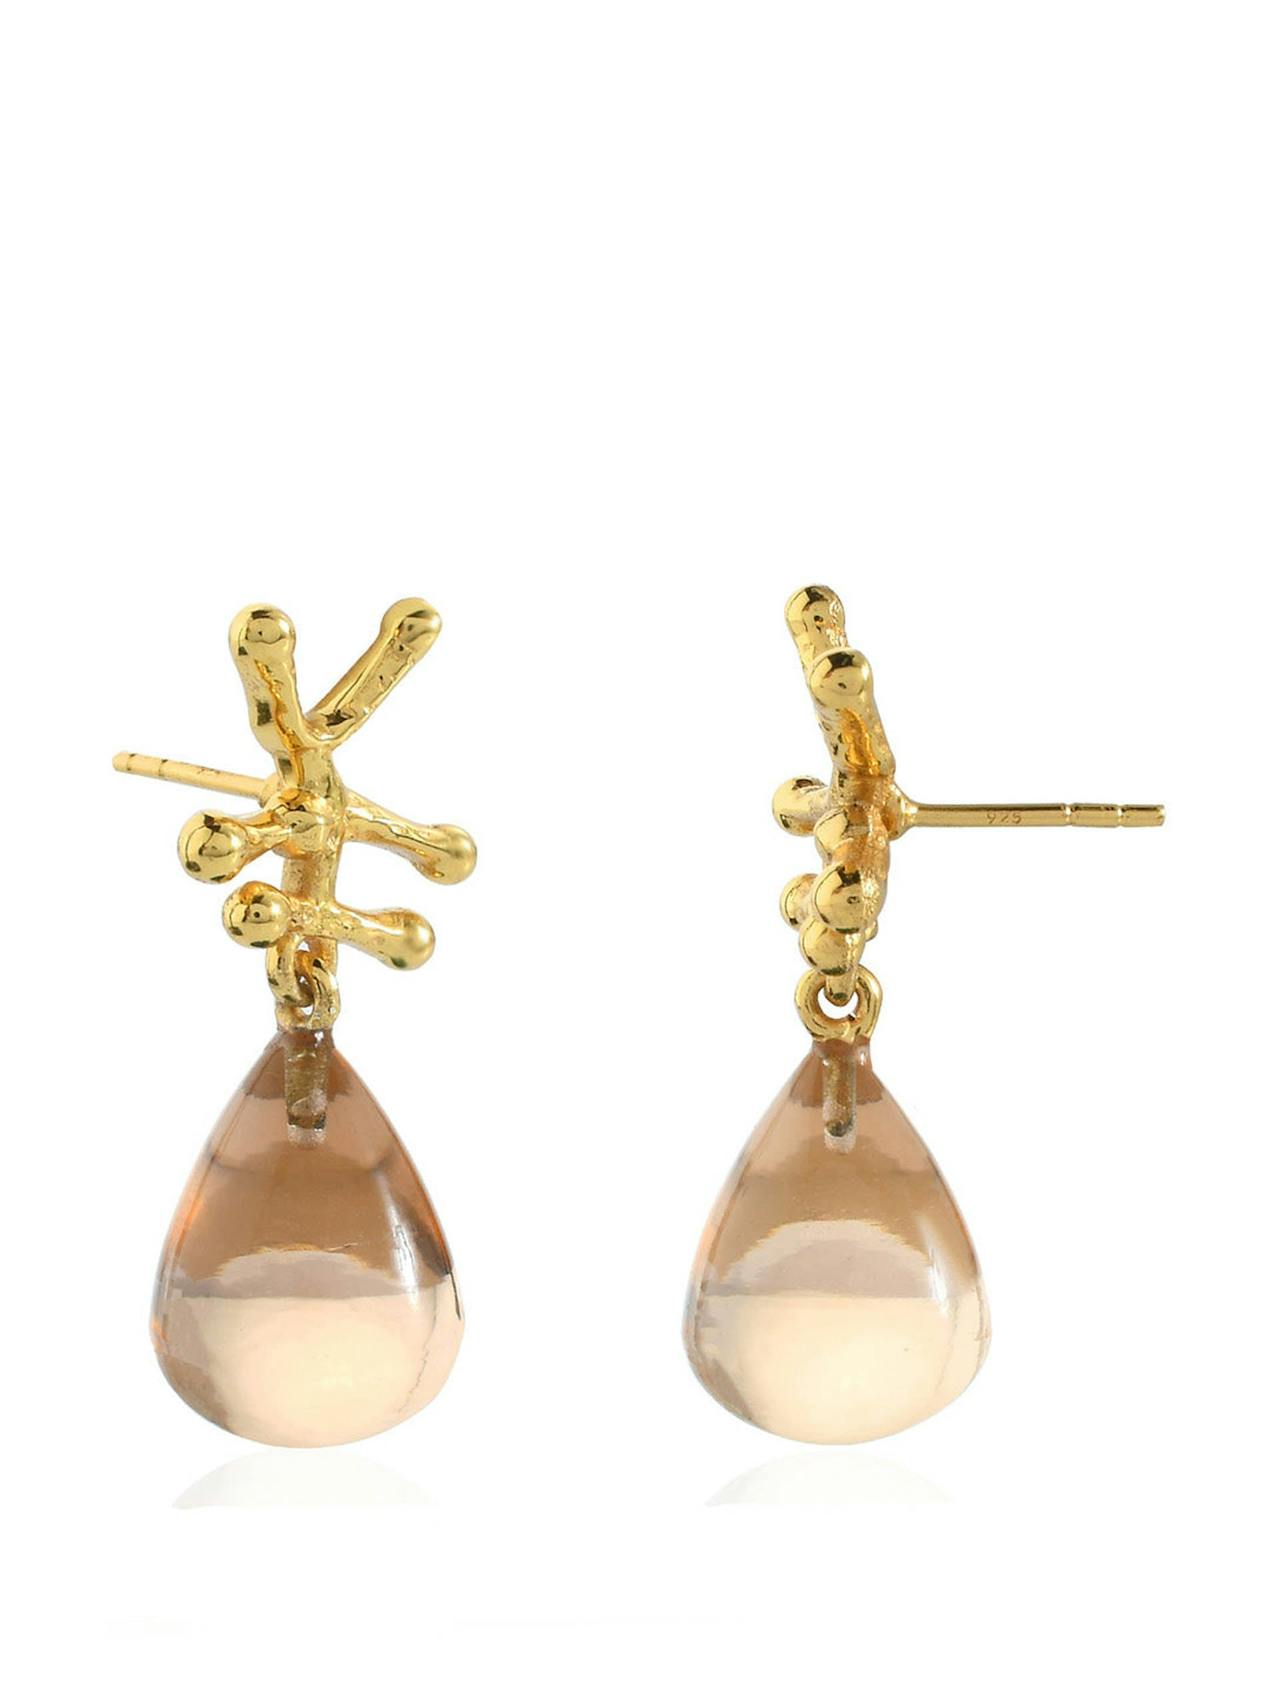 Champagne Nuria earrings